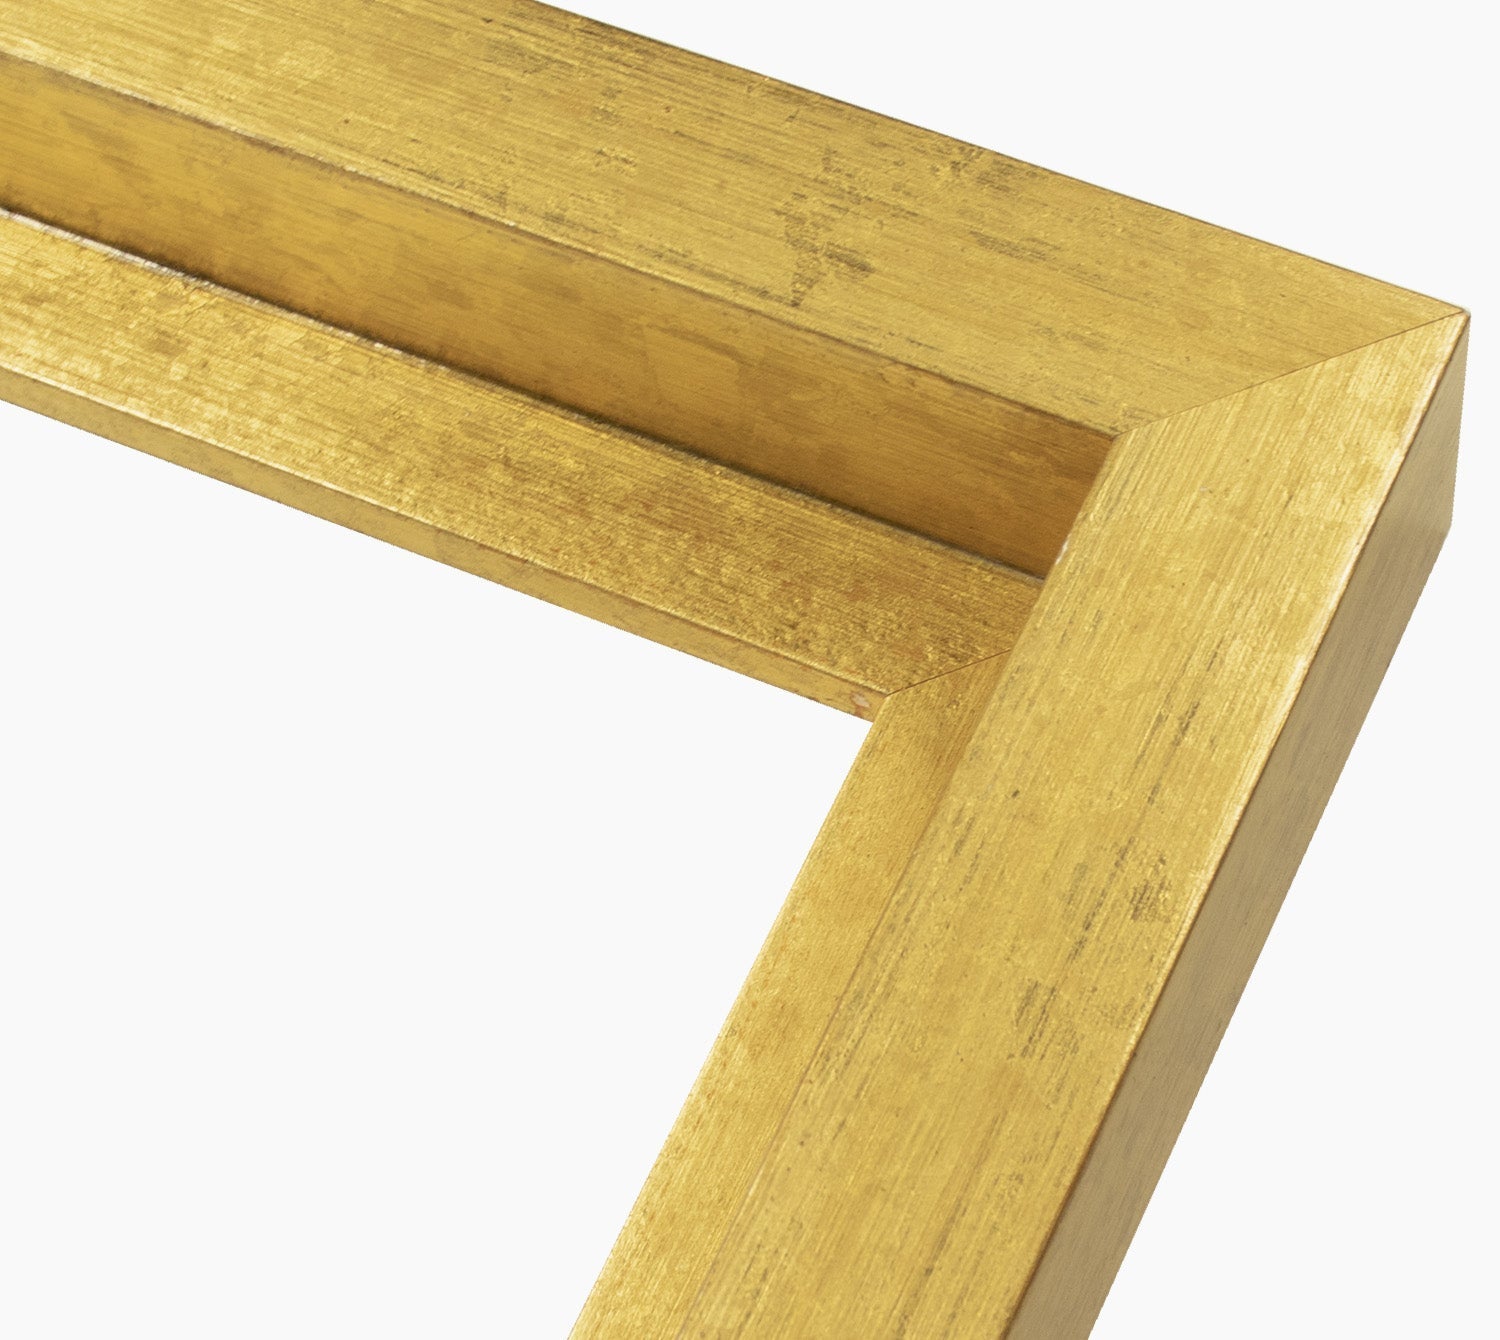 605.300 cadre en bois a la feuille d'or mesure de profil 60x55 mm Lombarda cornici S.n.c.